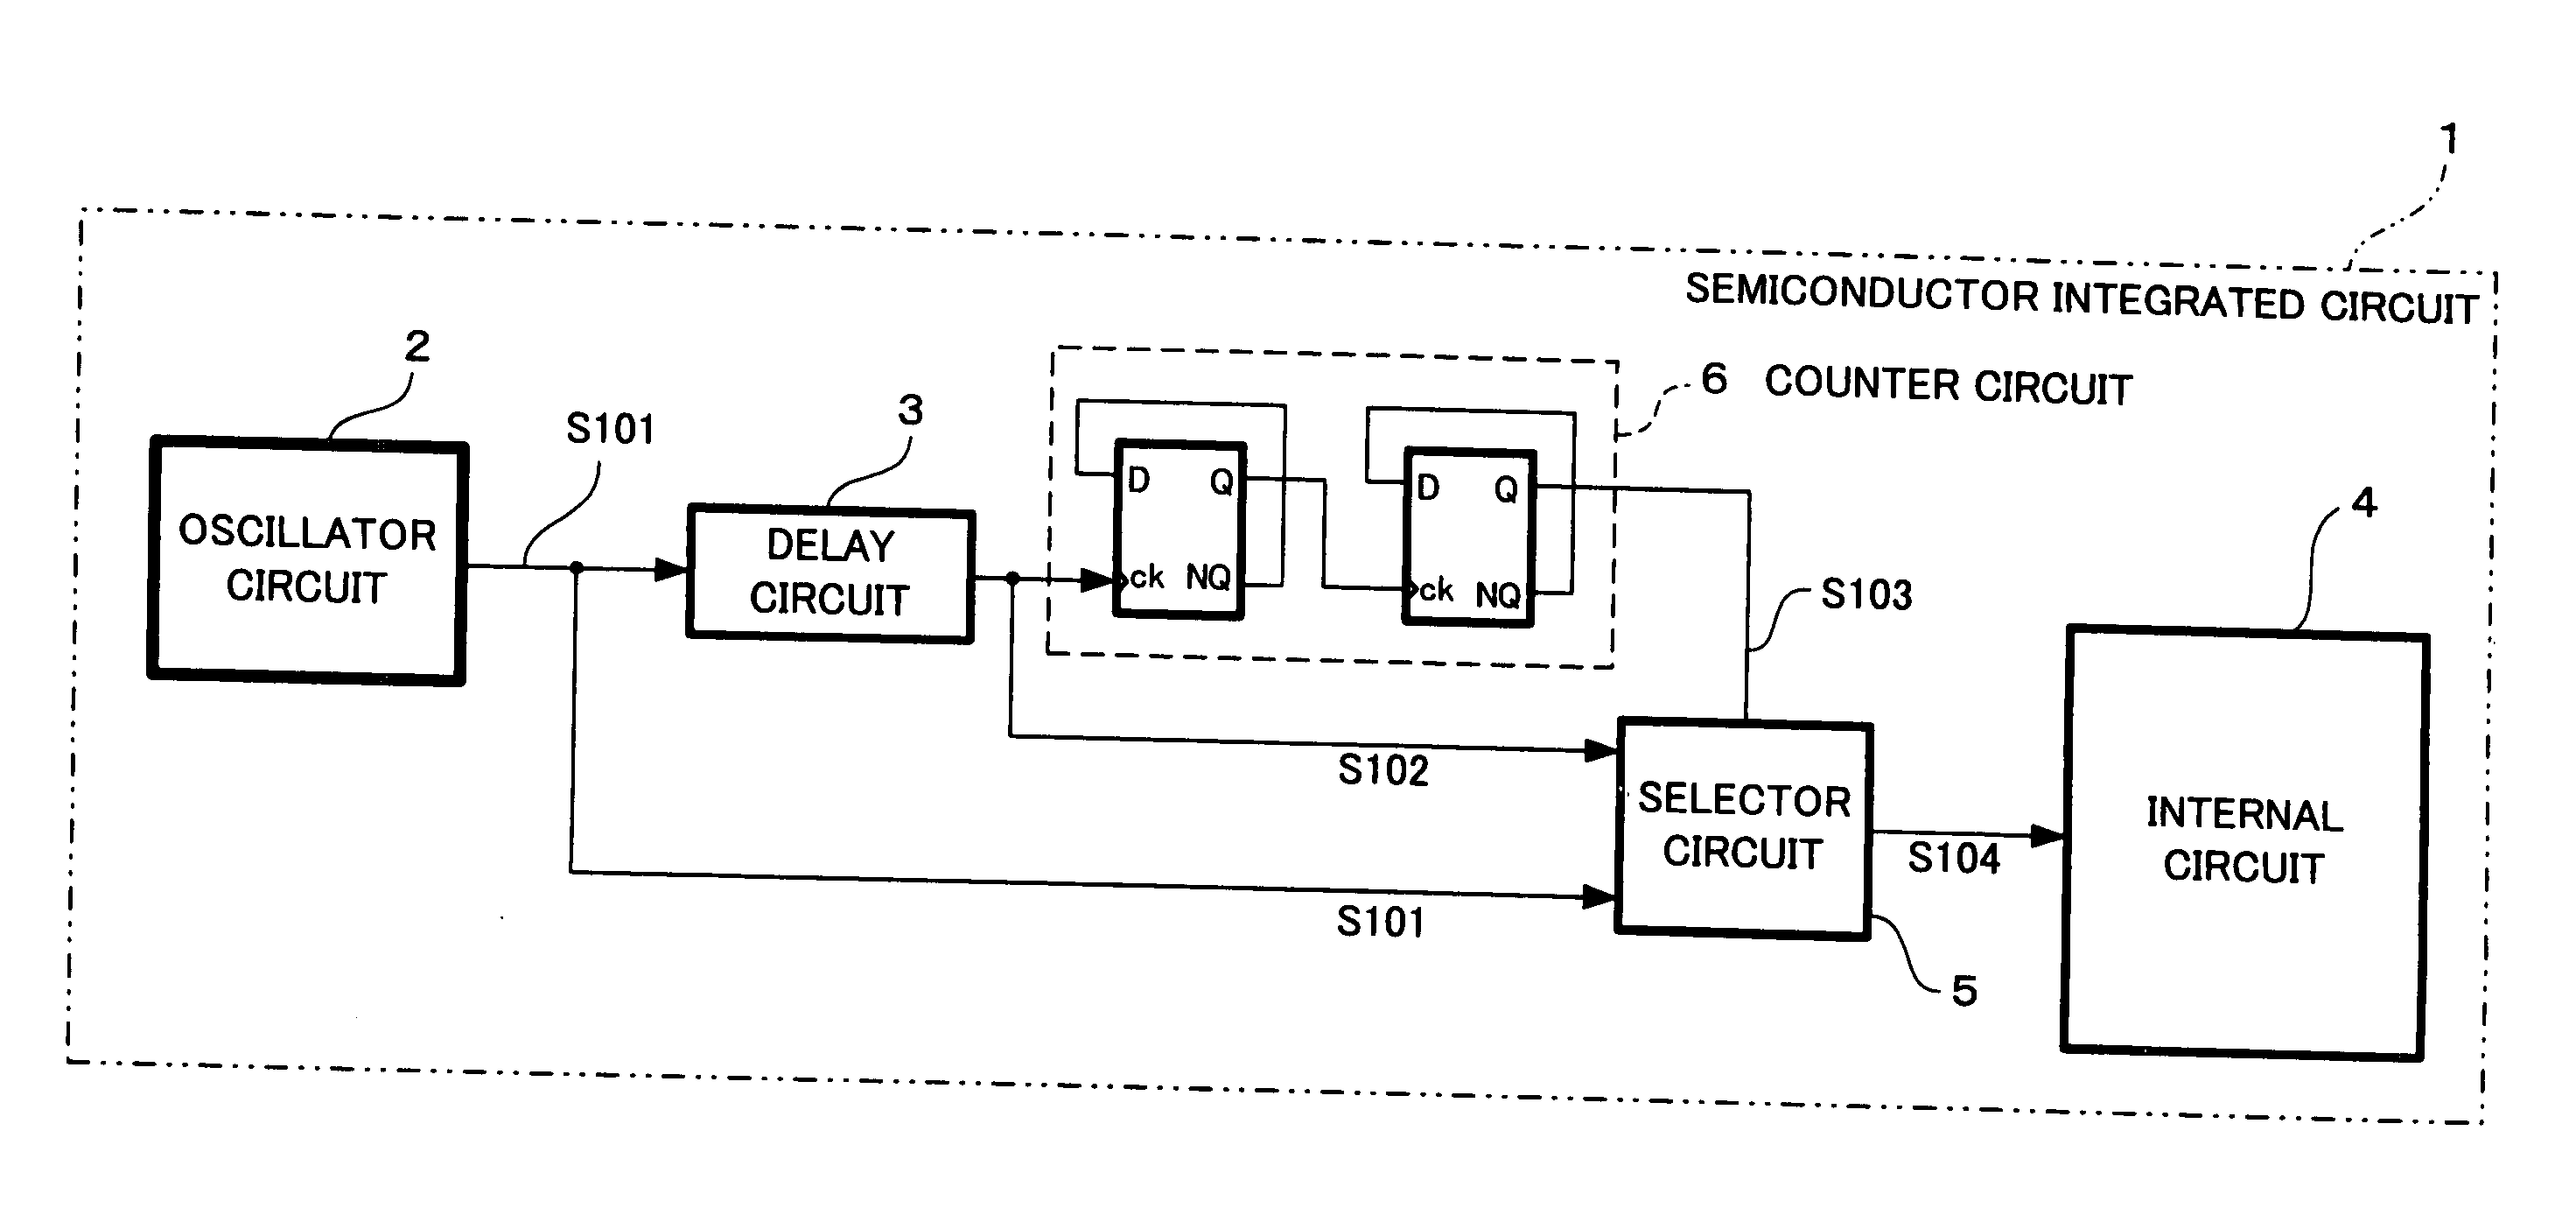 Semiconductor equipment